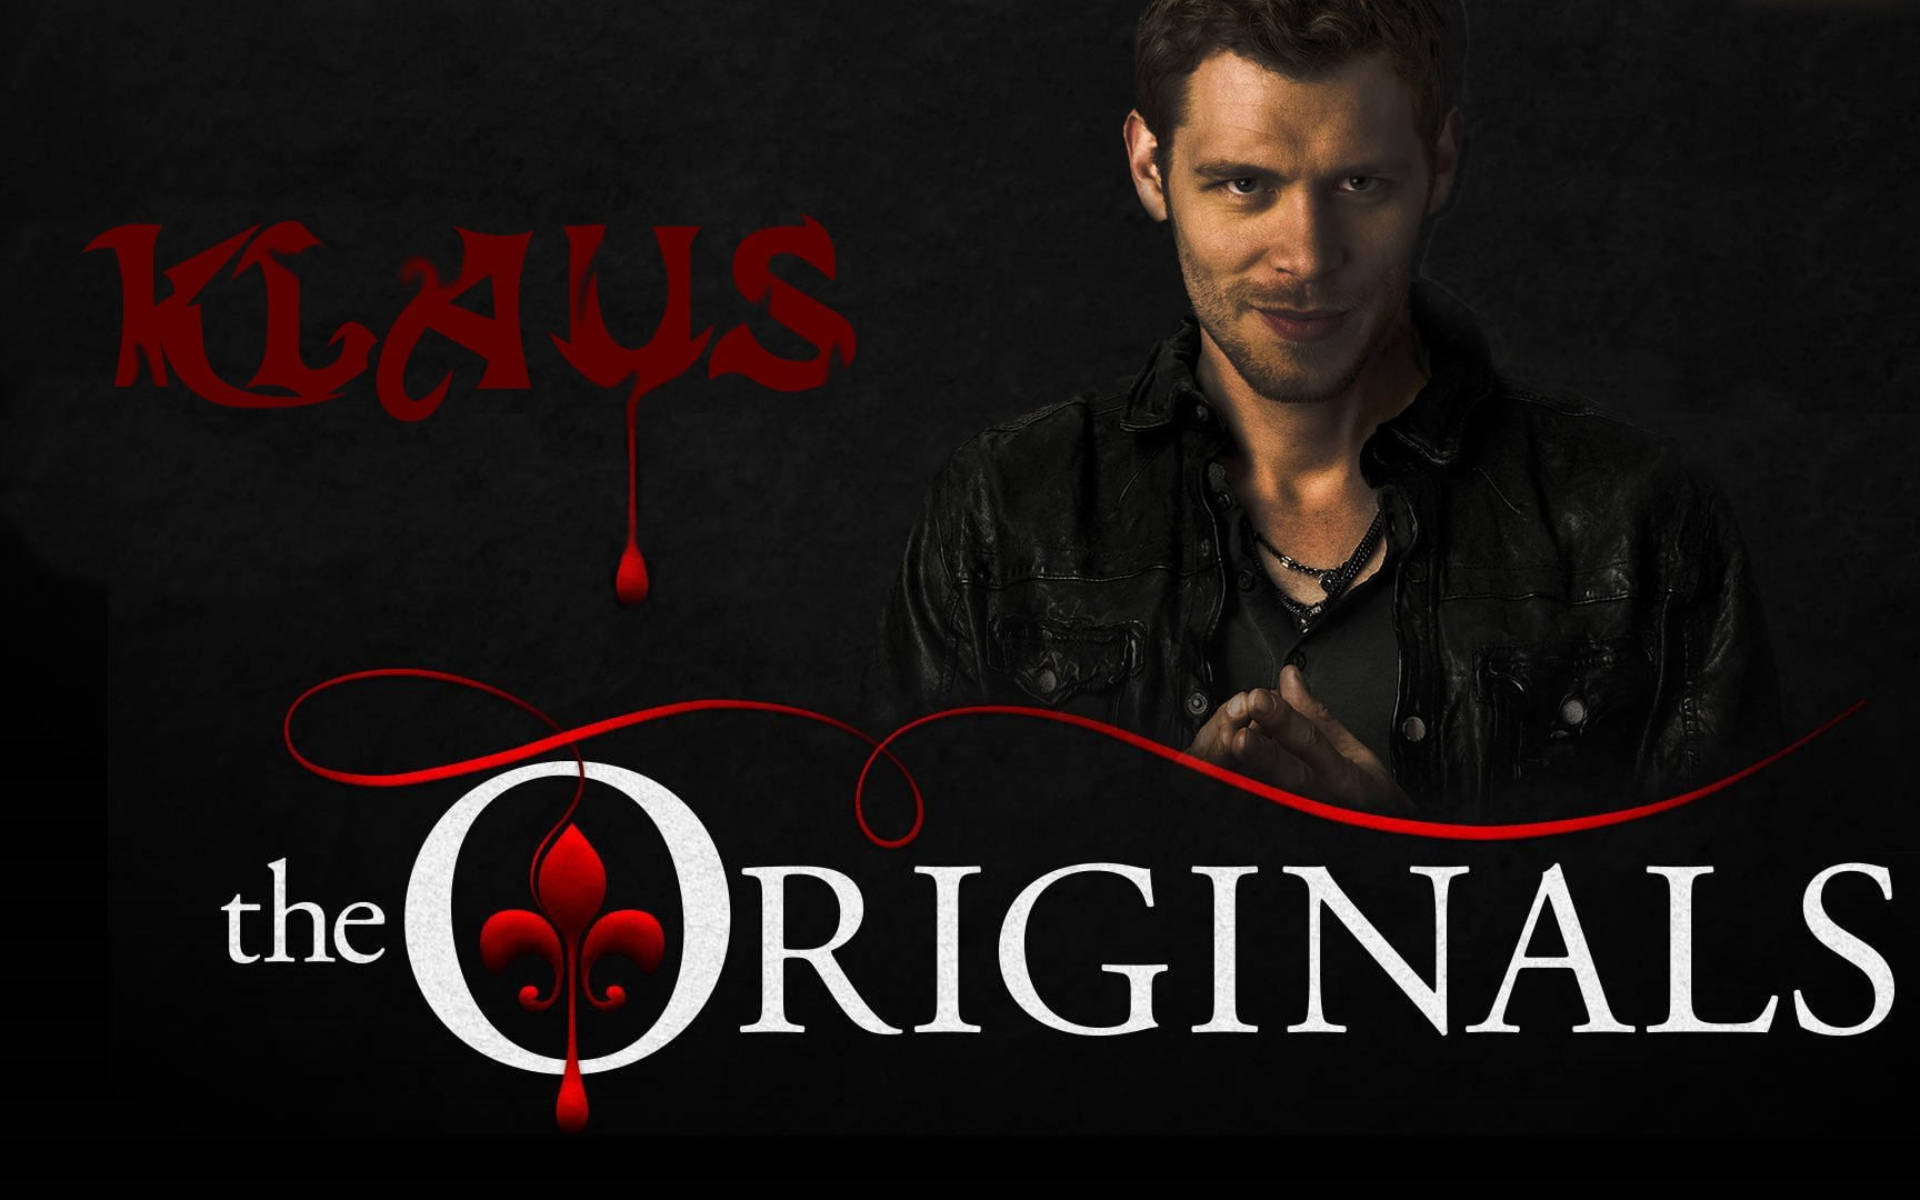 The Originals Klaus Cover Background